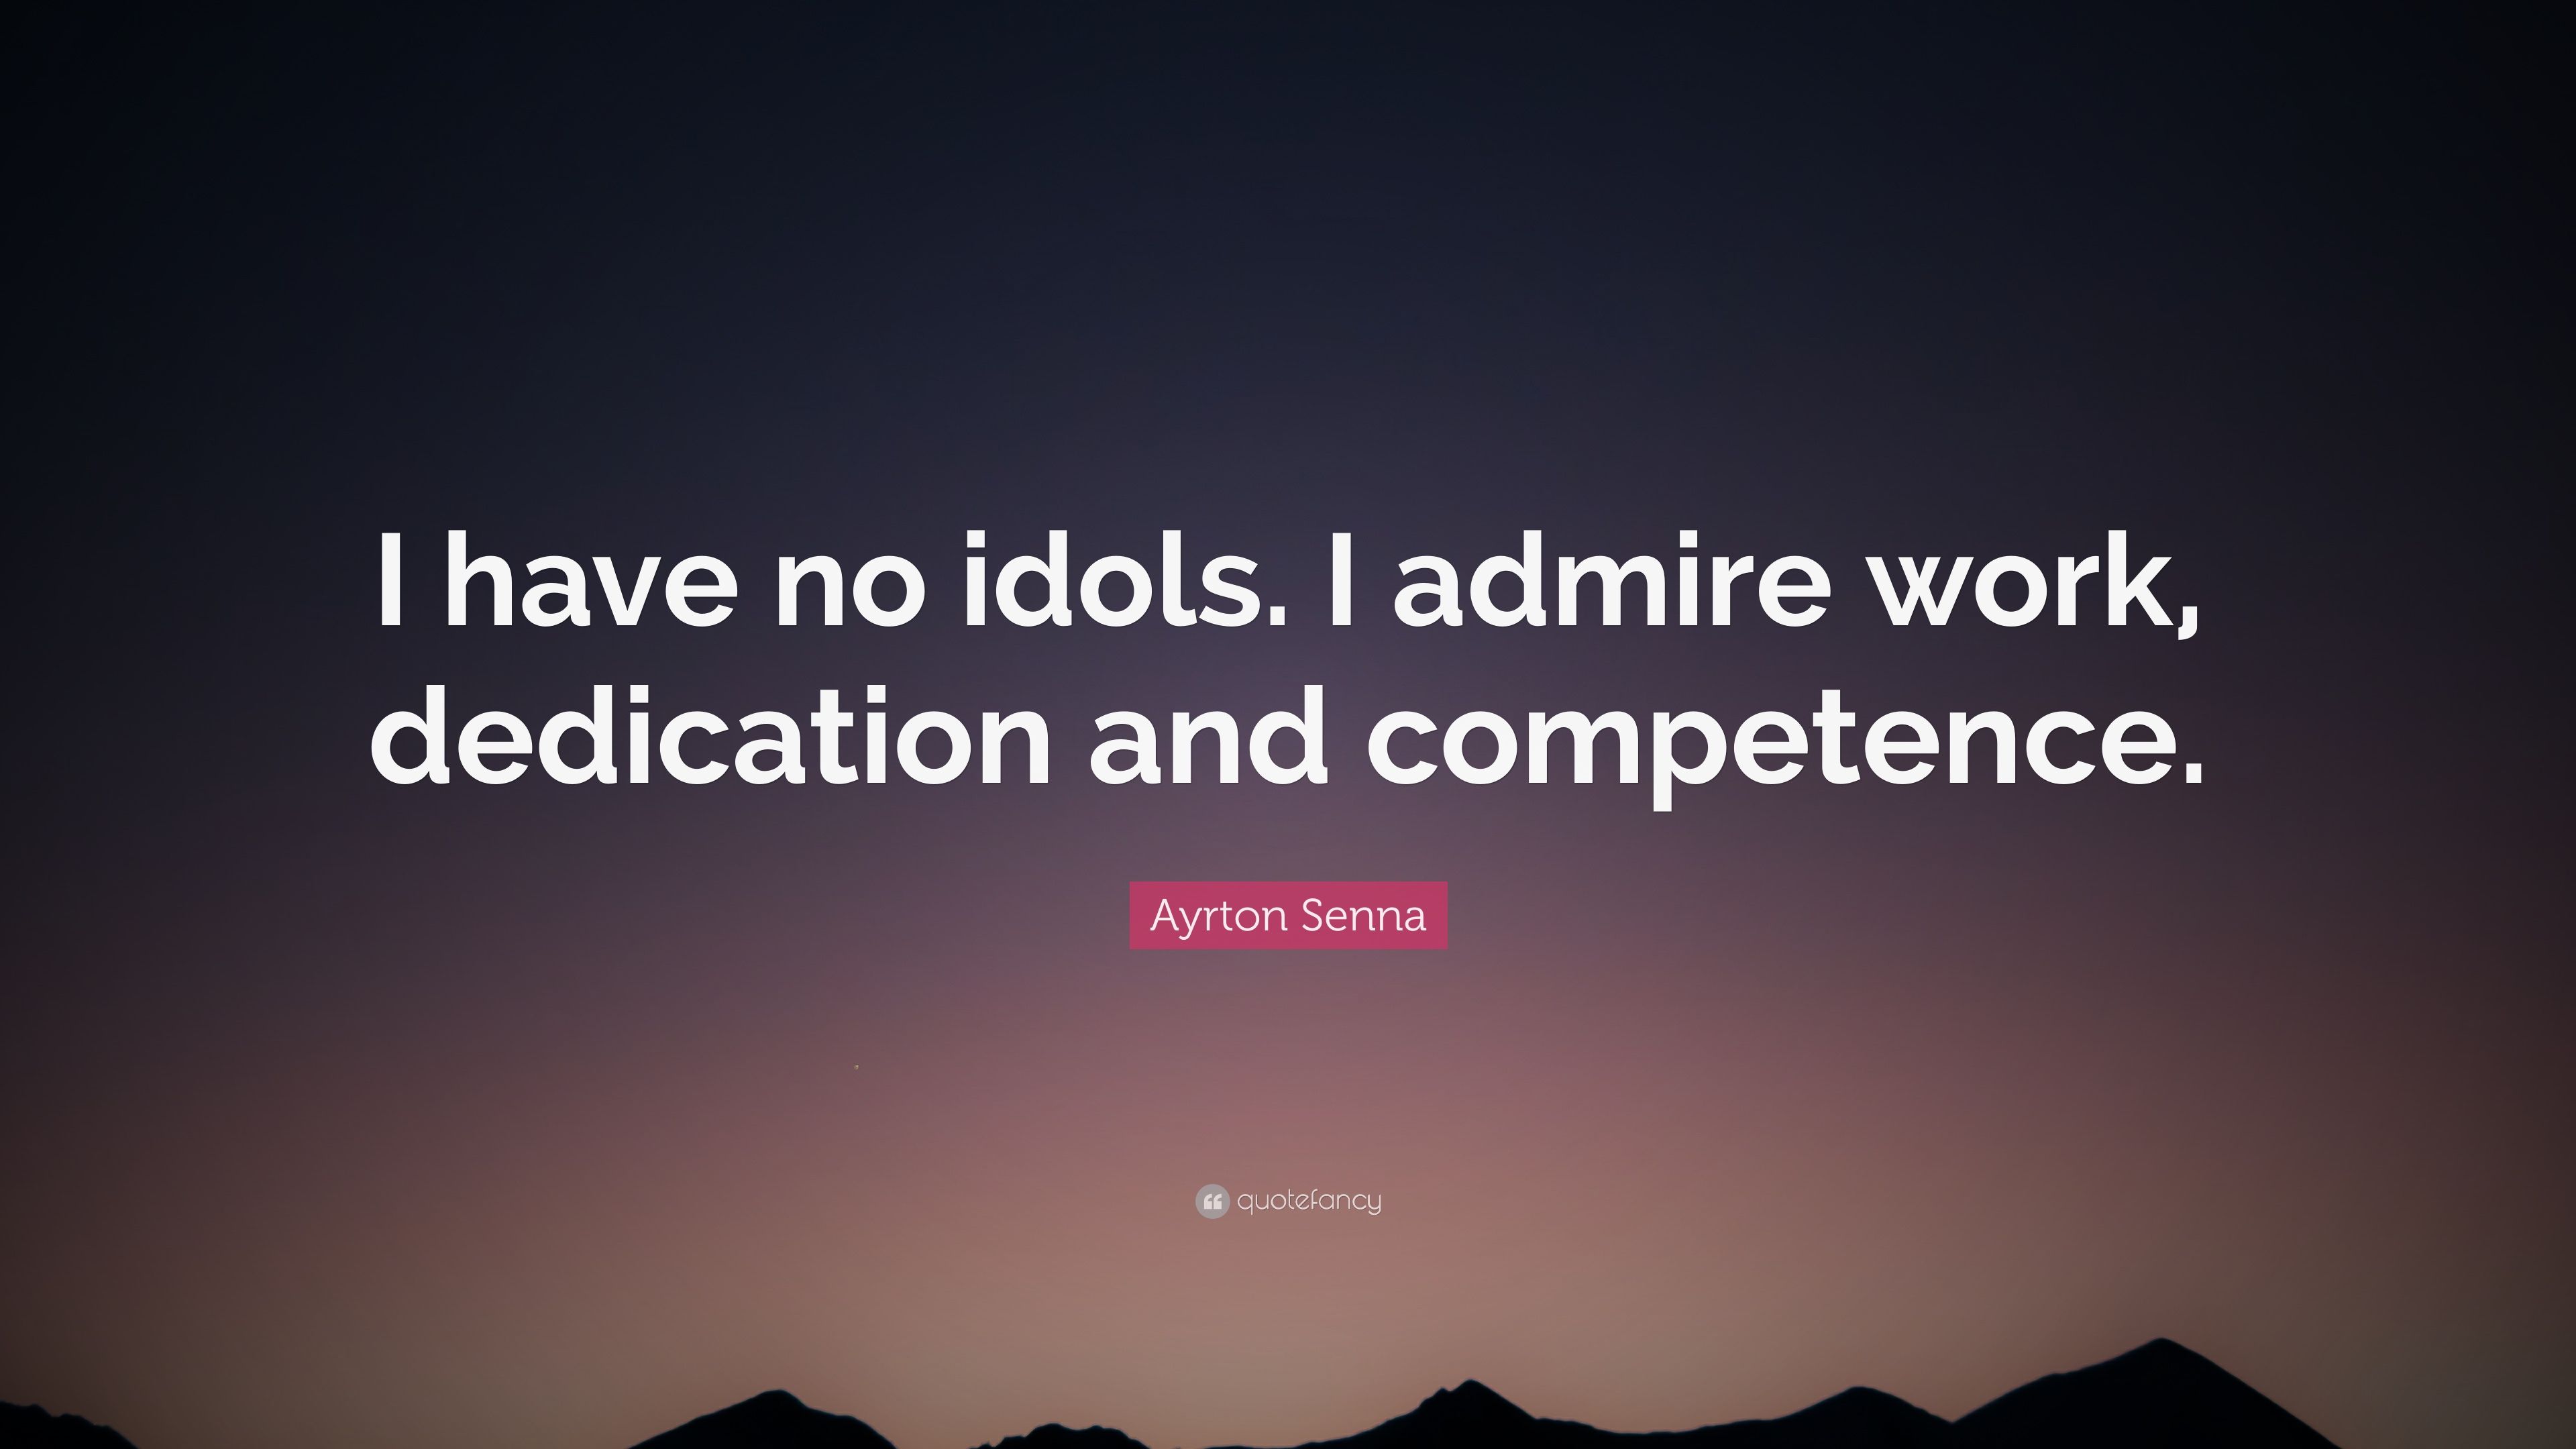 Ayrton Senna Quote: “I have no idols. I admire work, dedication